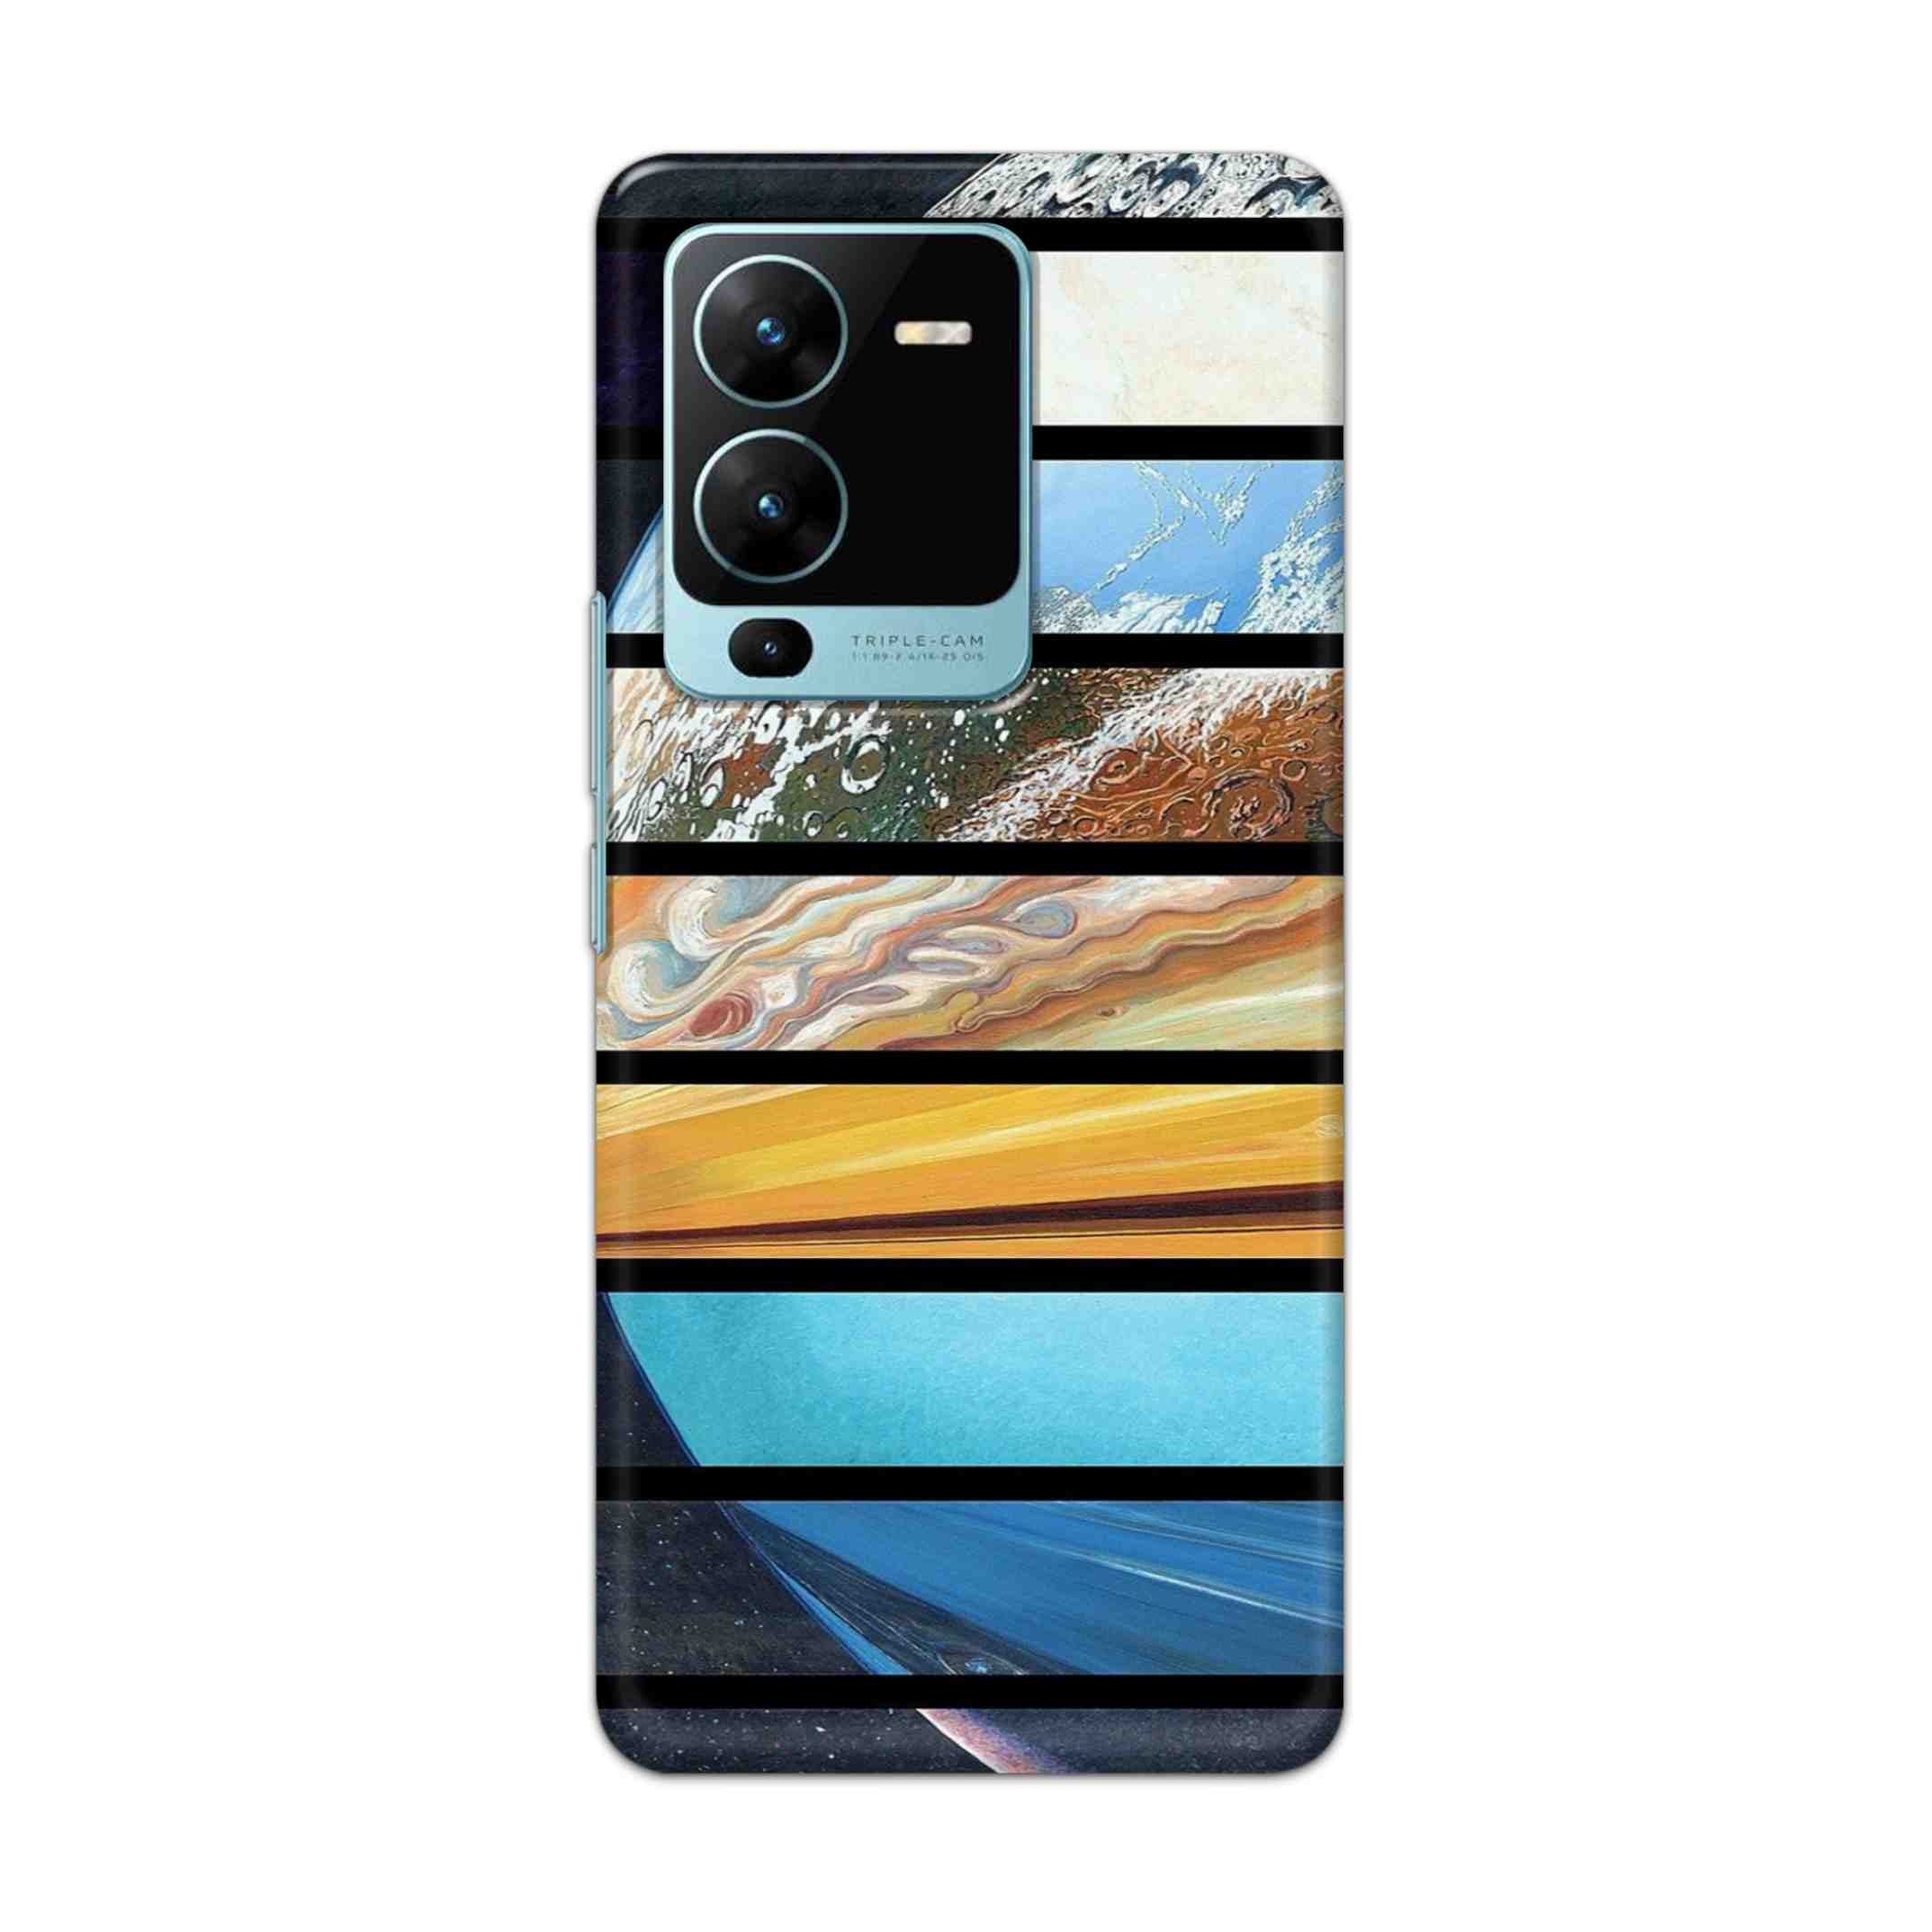 Buy Colourful Earth Hard Back Mobile Phone Case Cover For Vivo V25 Pro Online